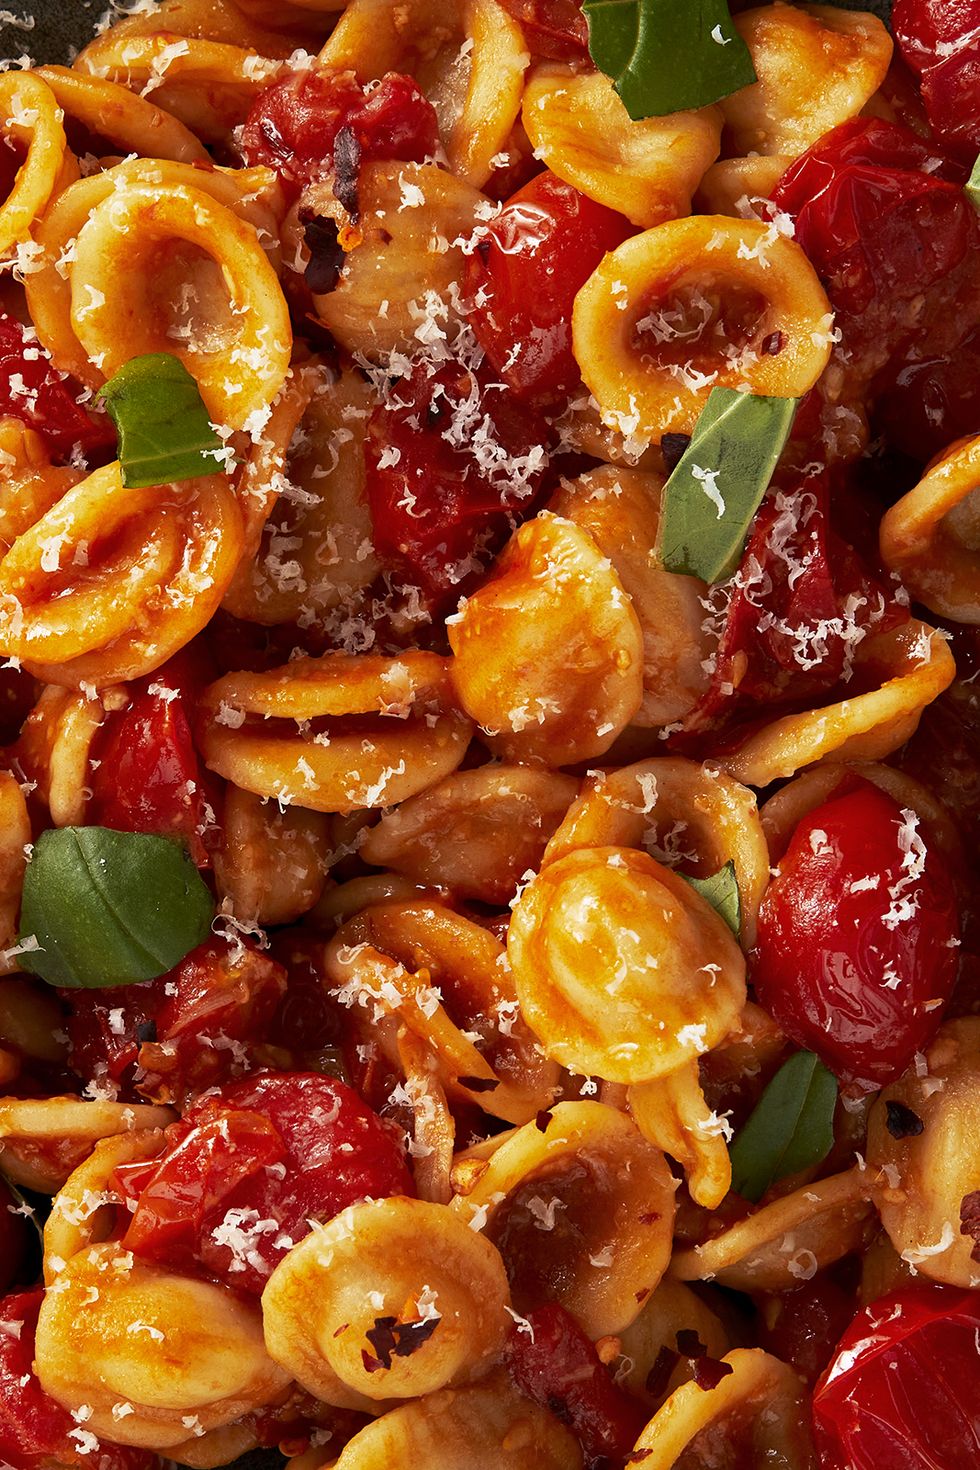 cherry tomato pasta